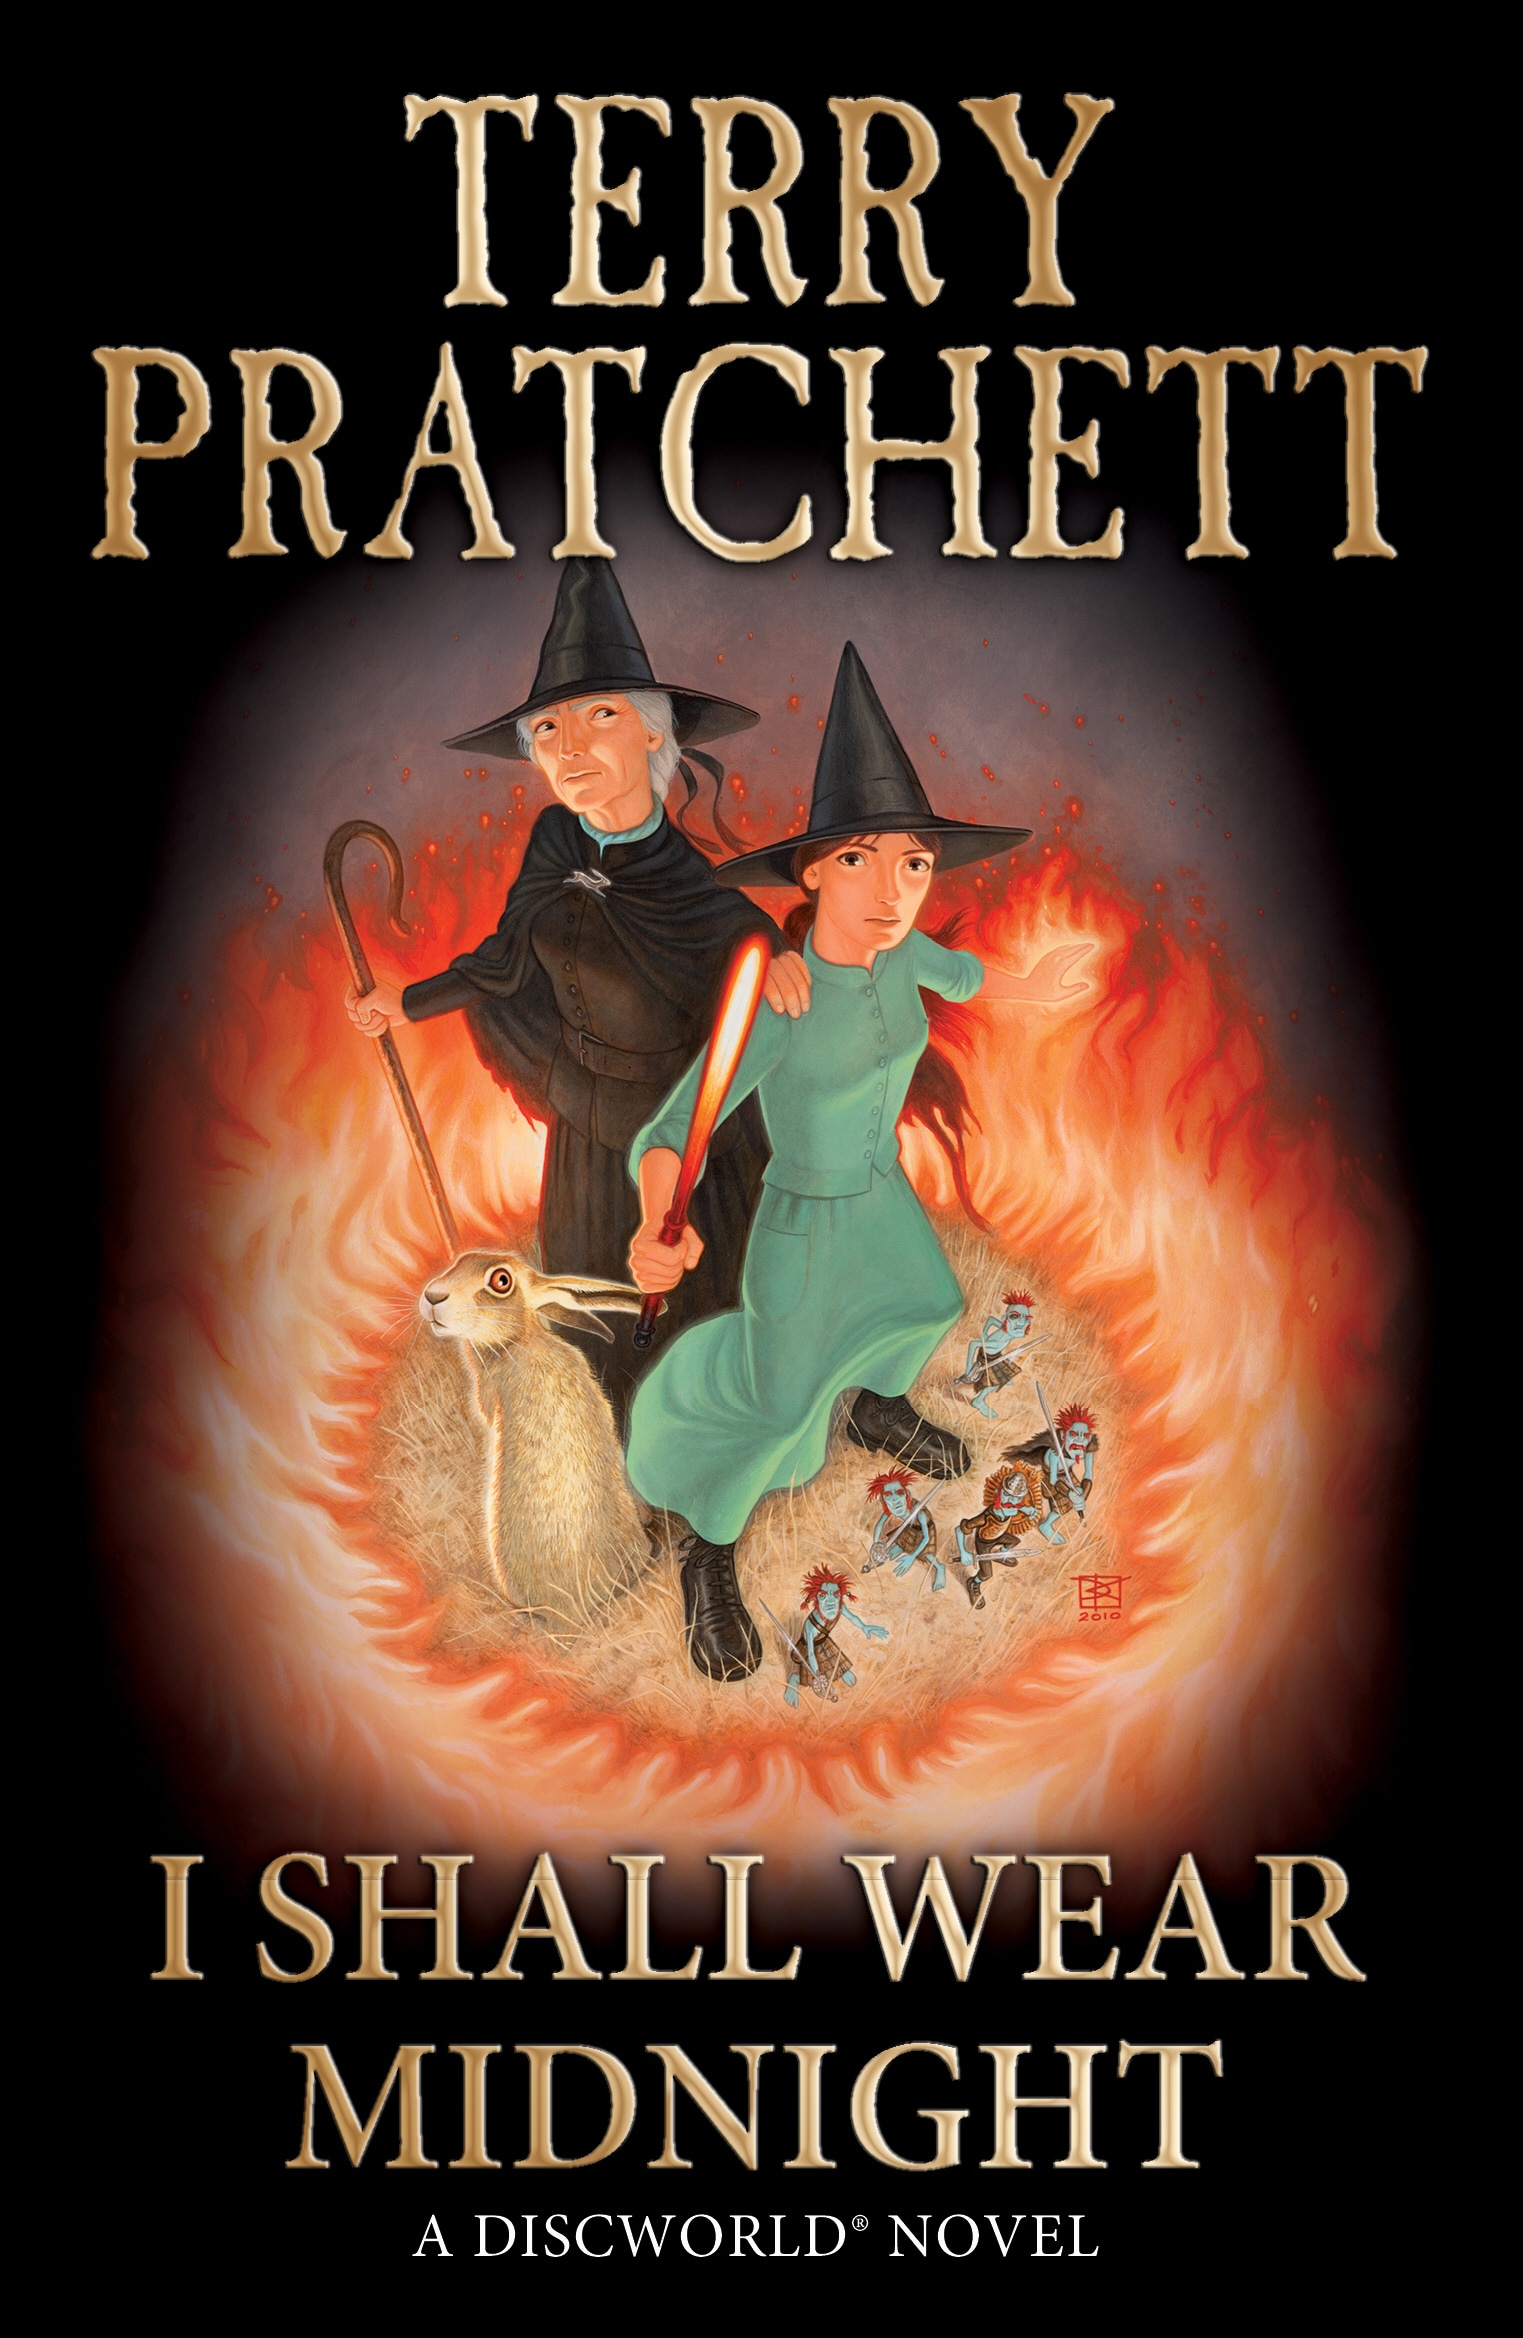 Book “I Shall Wear Midnight” by Terry Pratchett — June 7, 2012